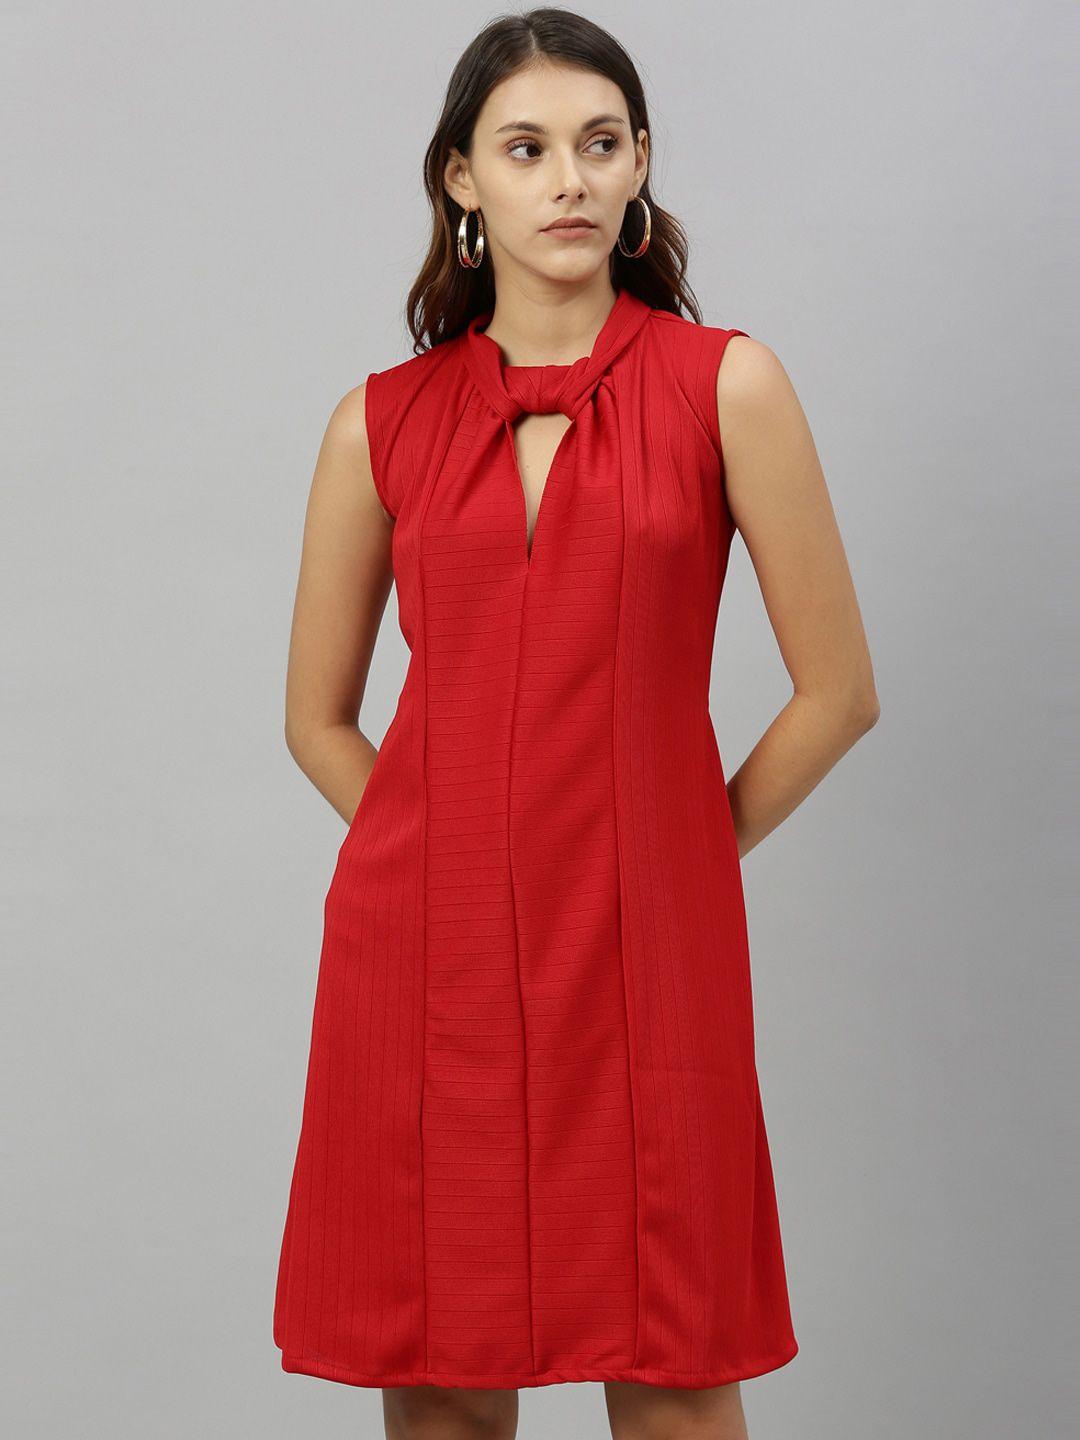 rareism-women-red-solid-a-line-dress